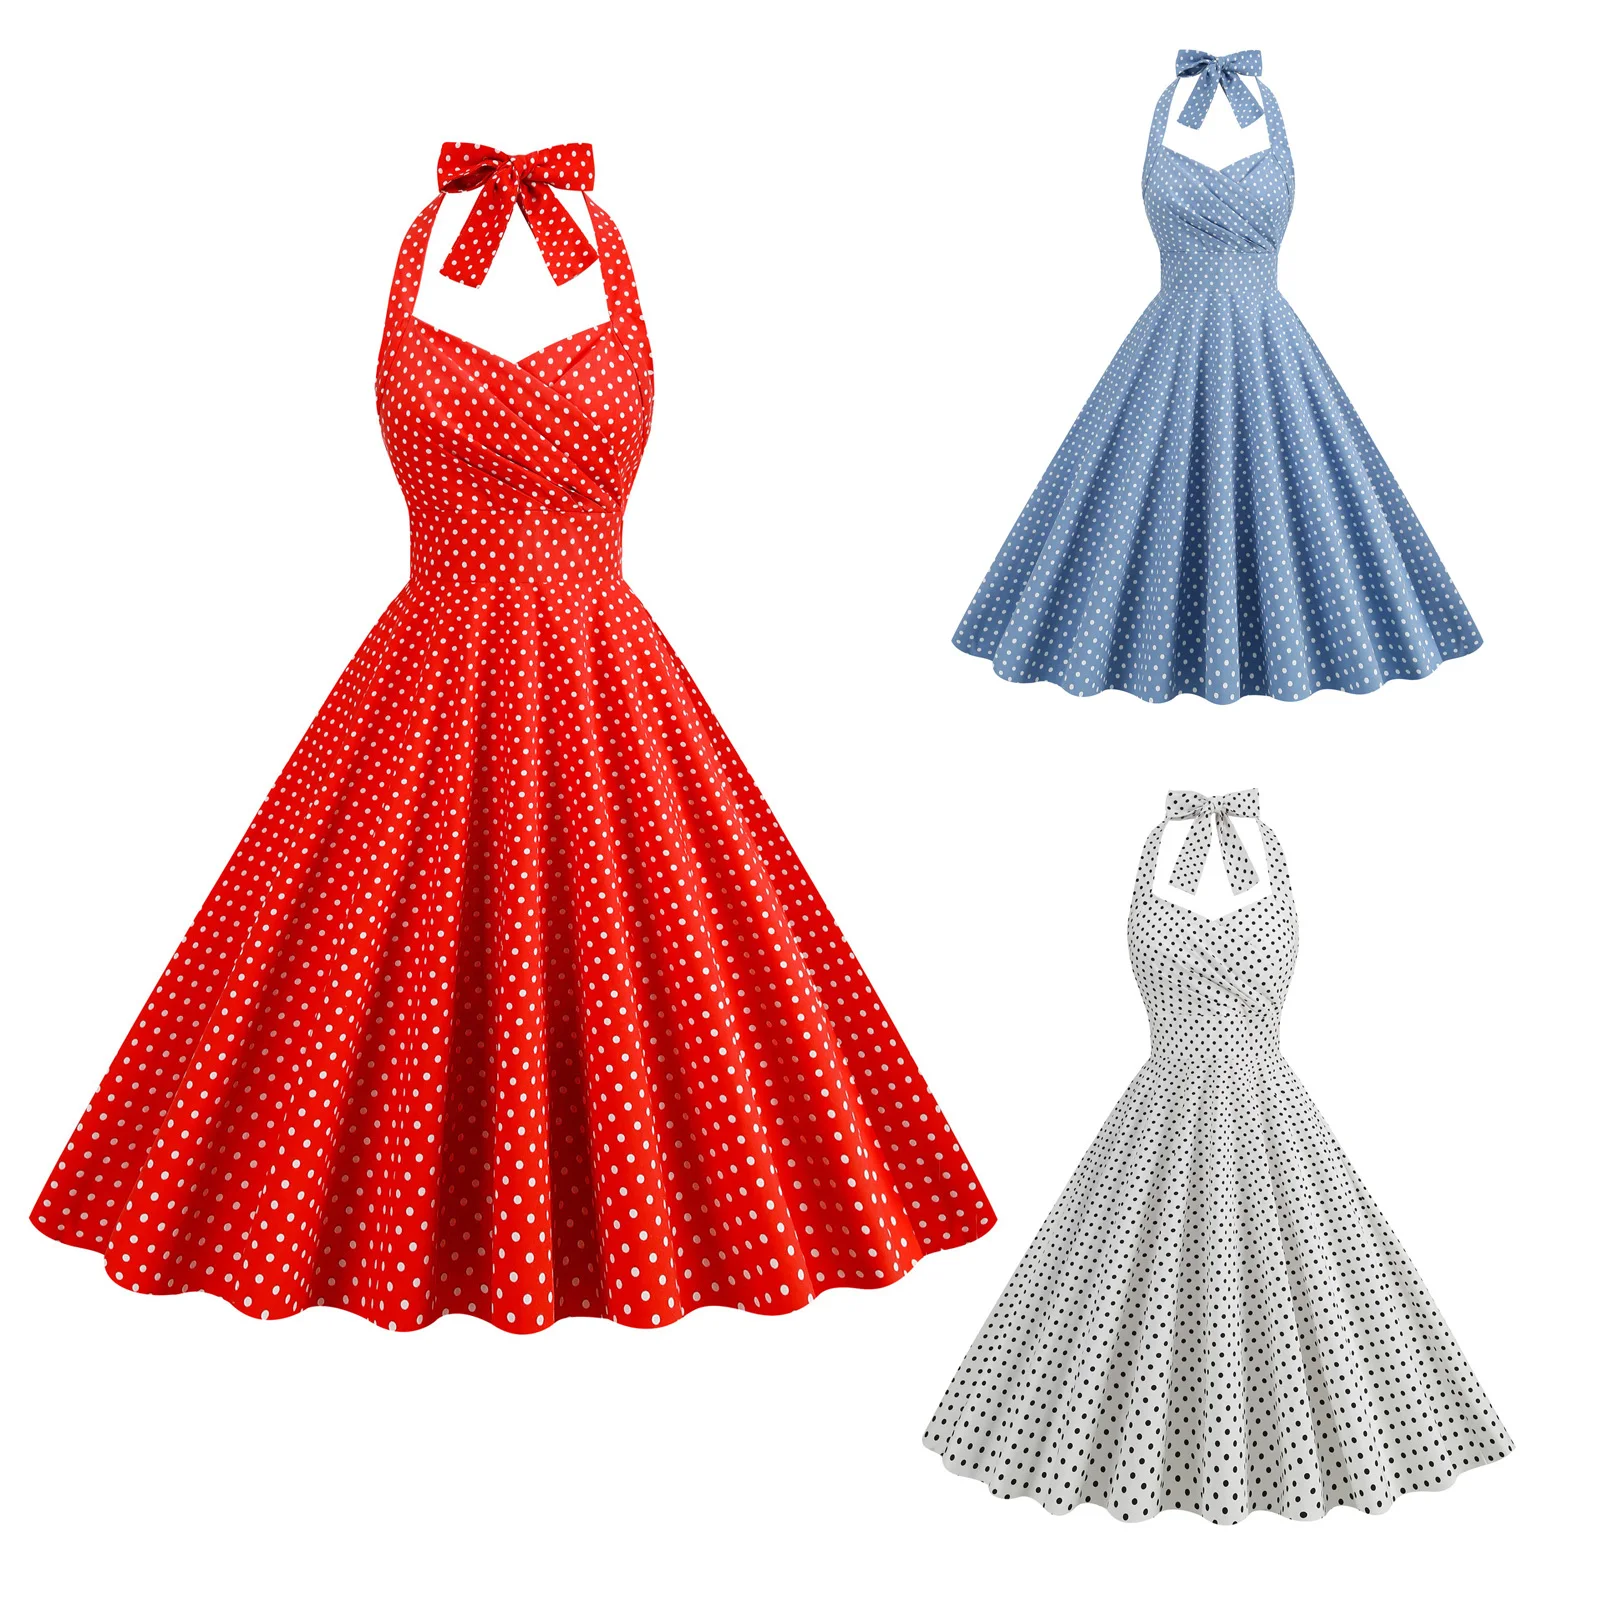 

Elegant Women Vintage Halterneck Dress With Pockets Polka Dots Rockabilly Cocktail Party Dress 1950s Swing Dress Summer Dress